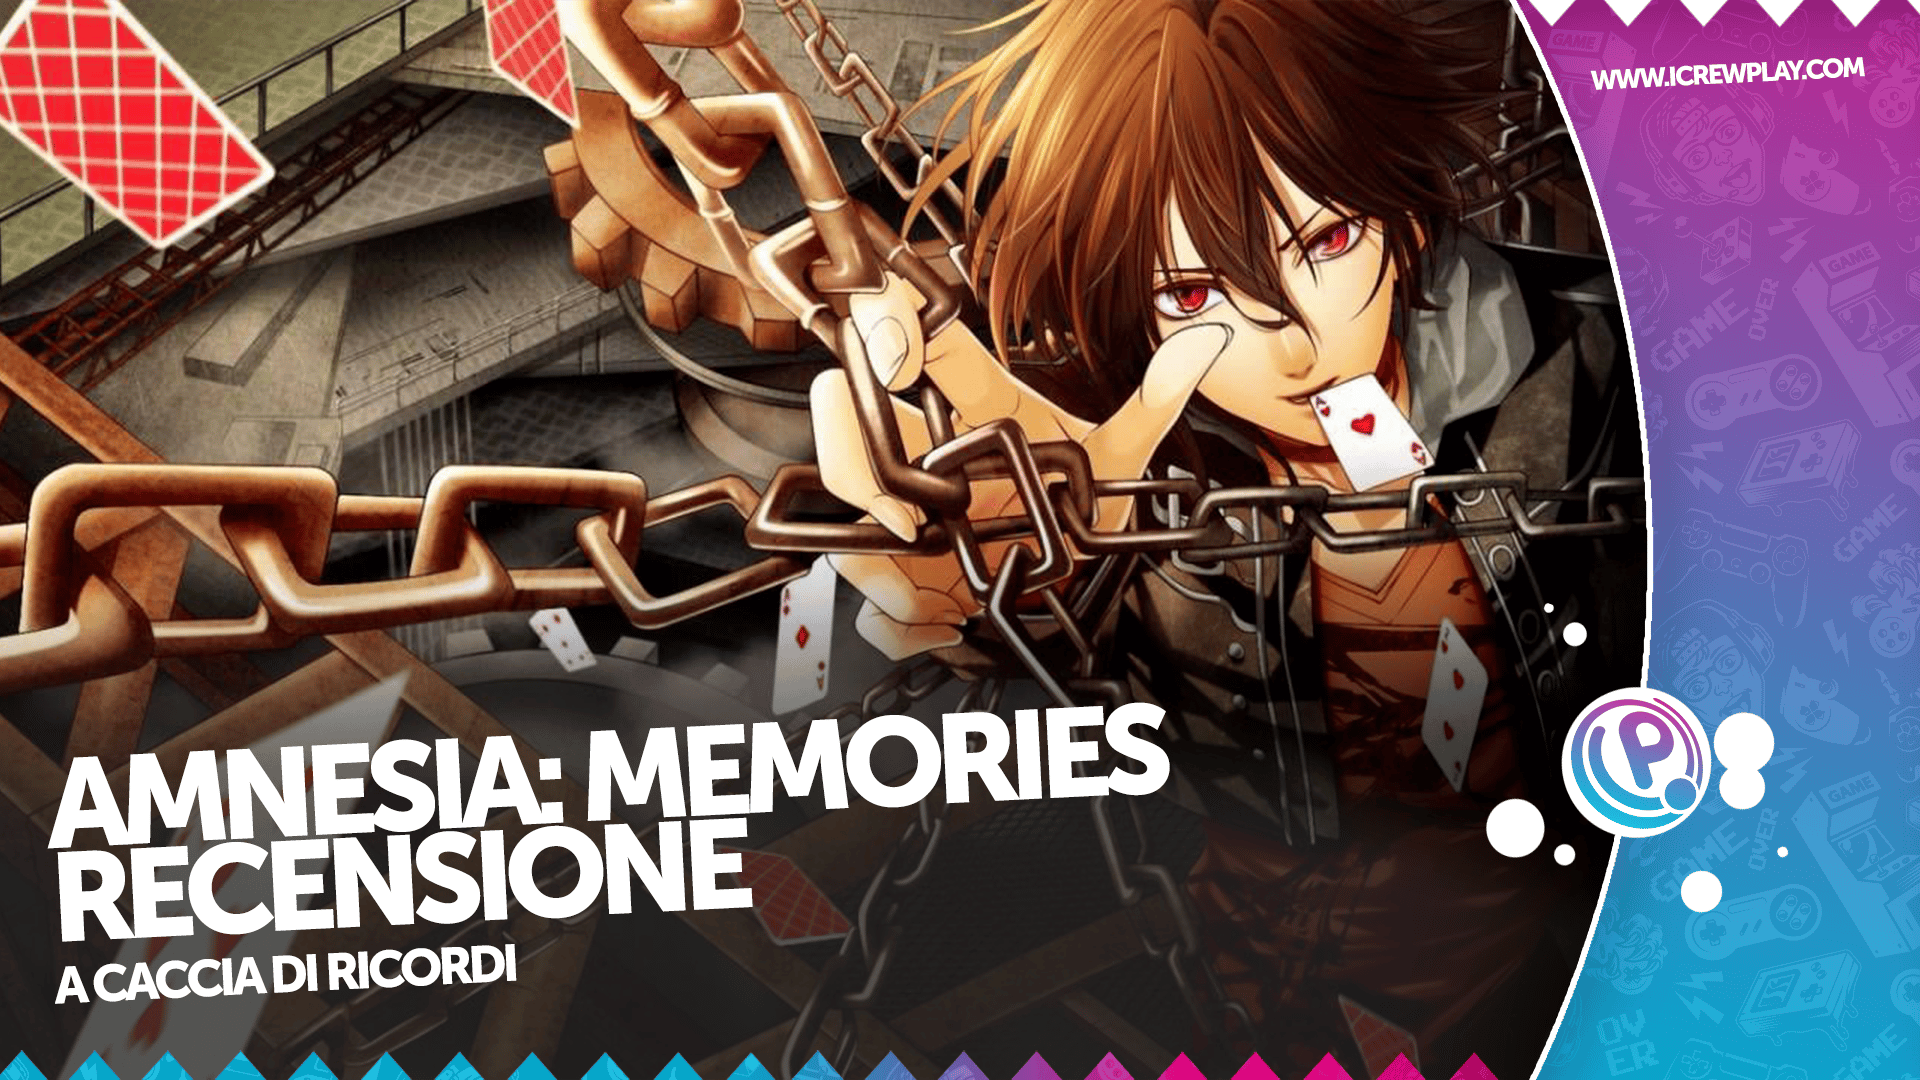 Amnesia: Memories recensione per Nintendo Switch 10